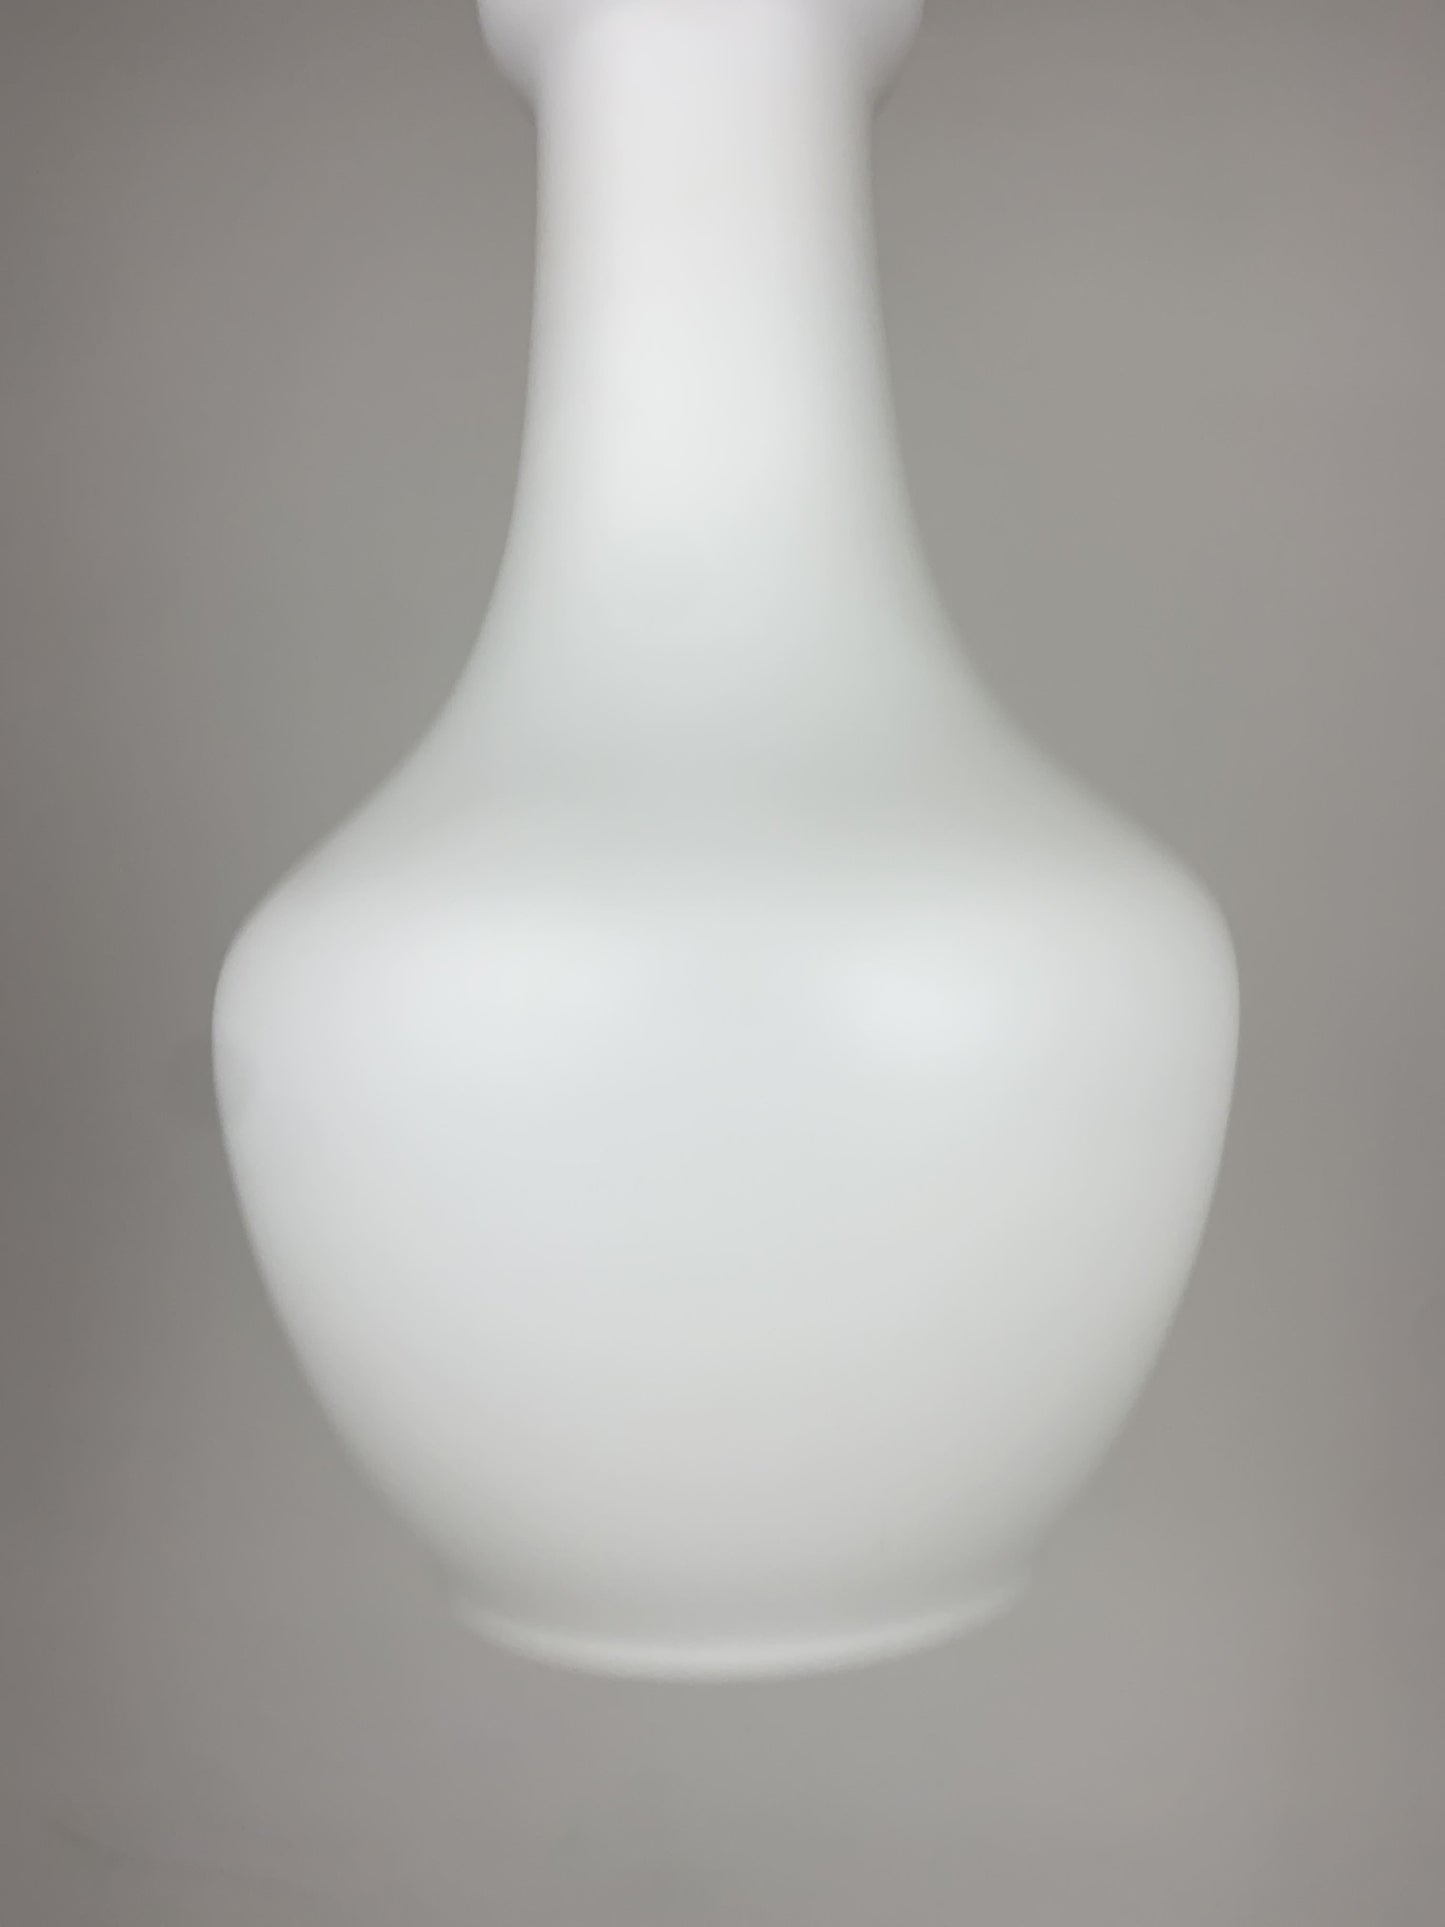 Italian white glass pendant light by Targetti Sankey 1960